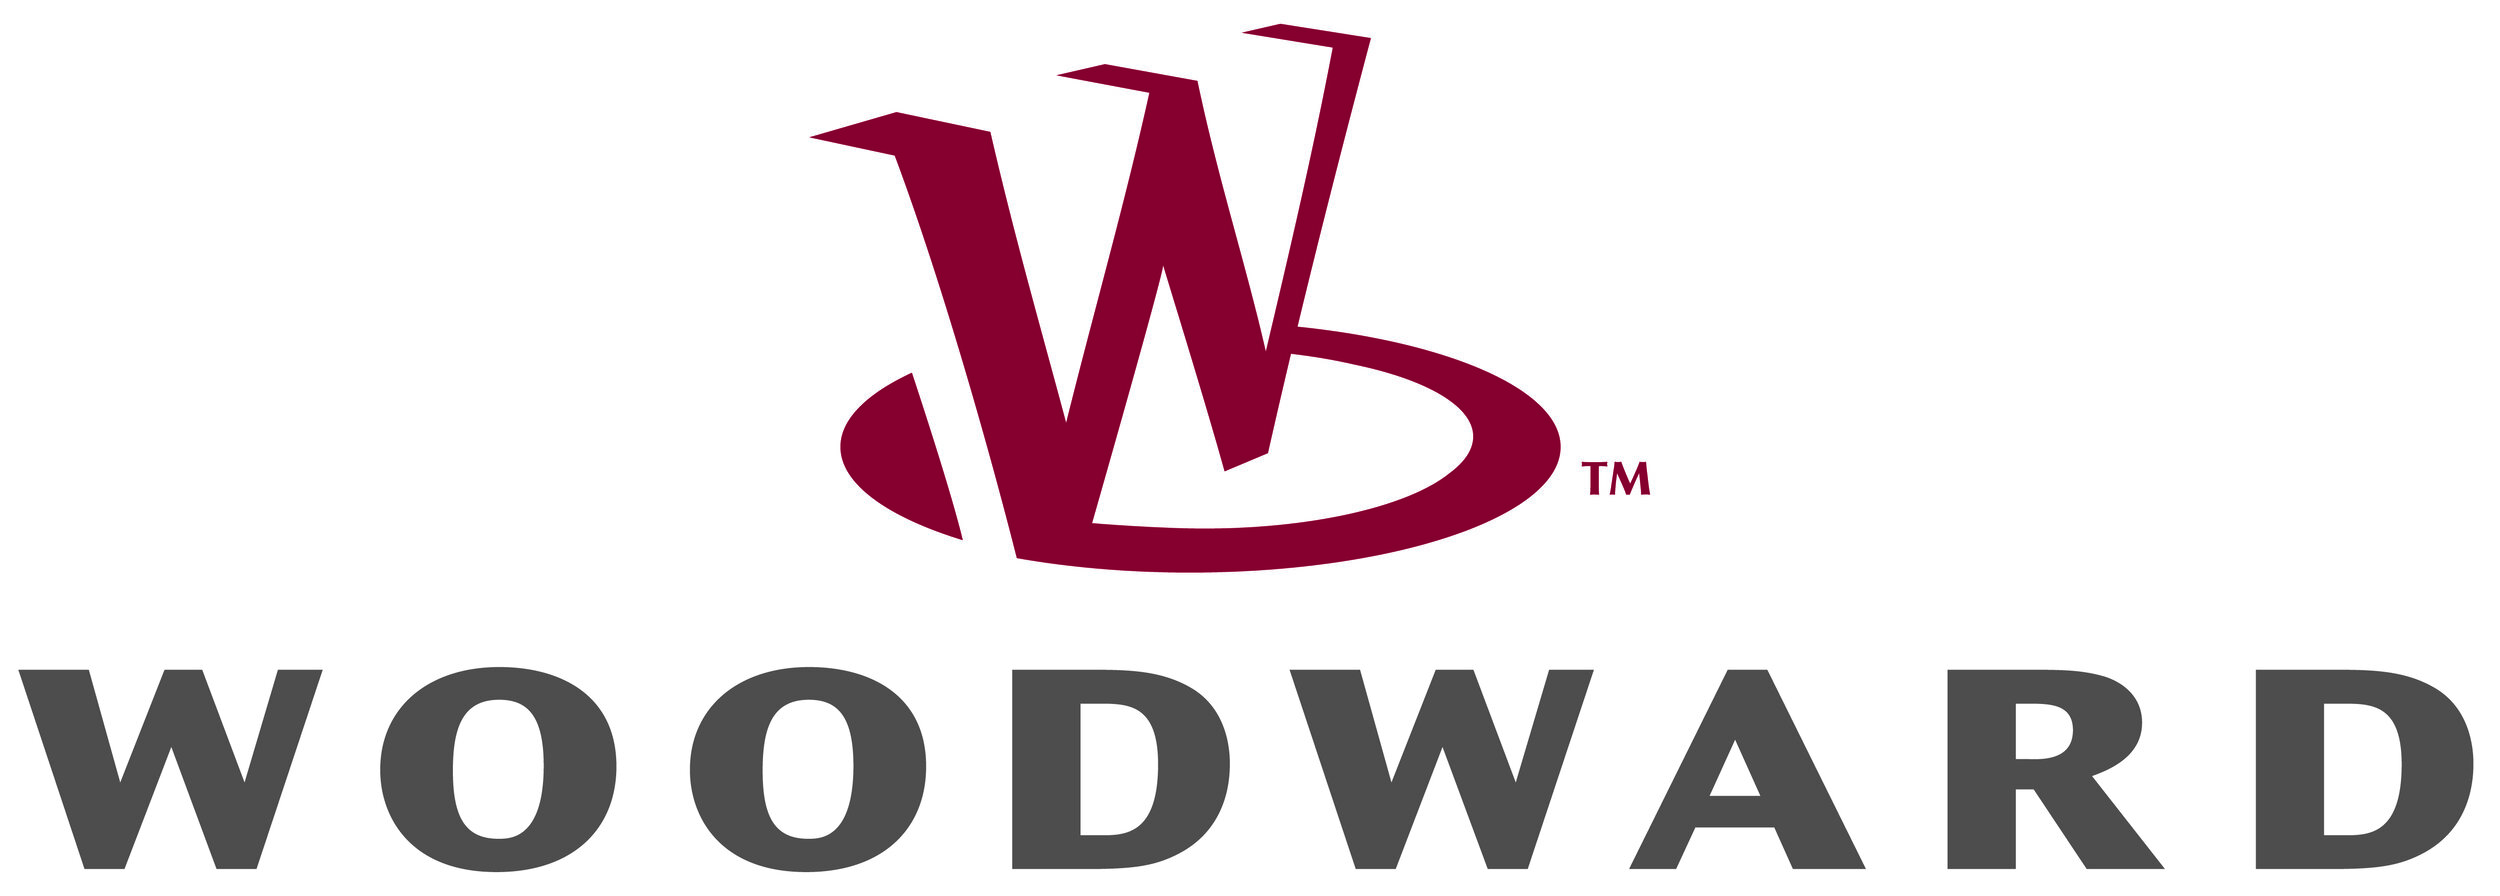 Stacked Woodward TM logo.jpg